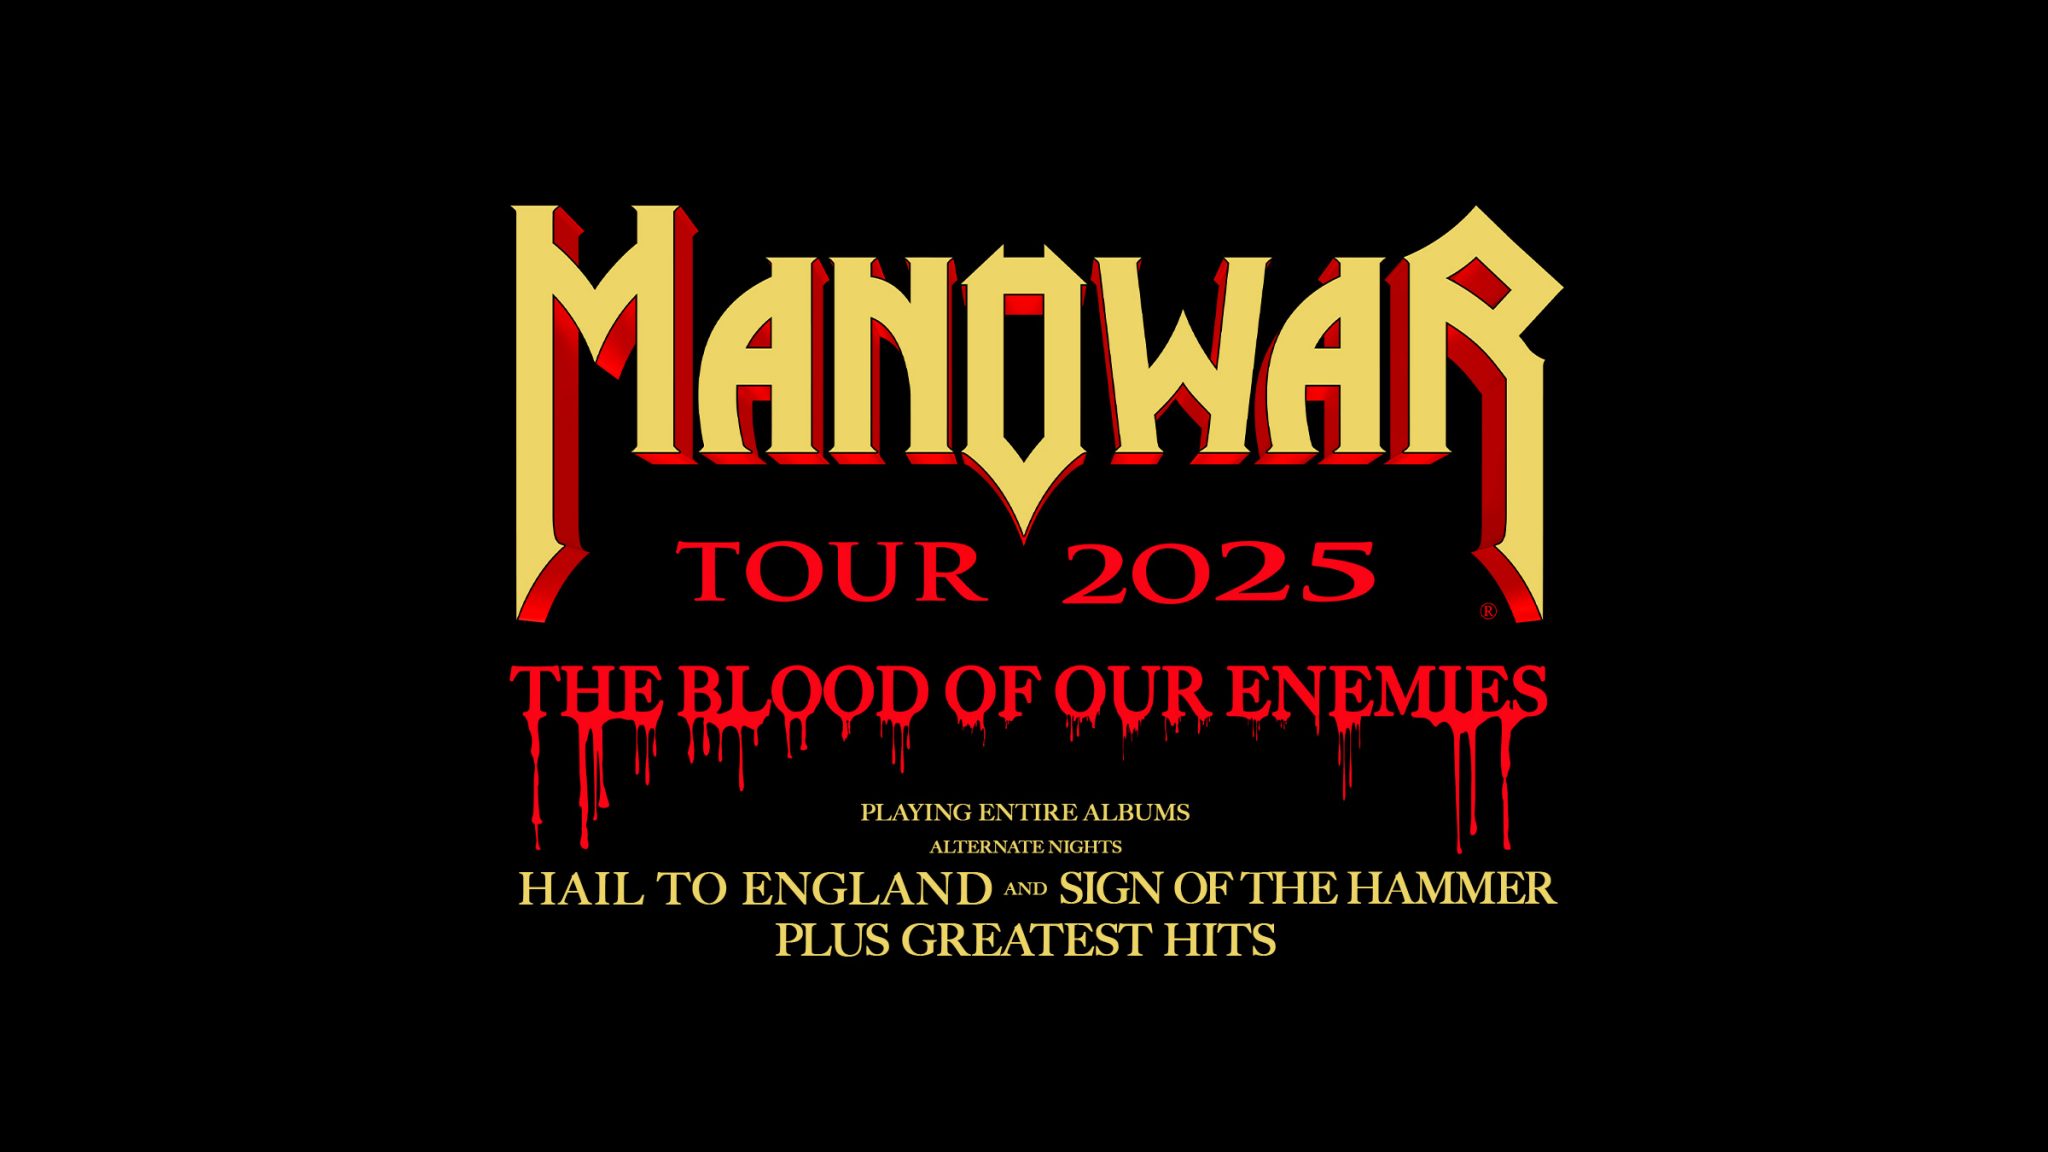 THE BLOOD OF OUR ENEMIES TOUR 2025 KIEL, GERMANY Manowar